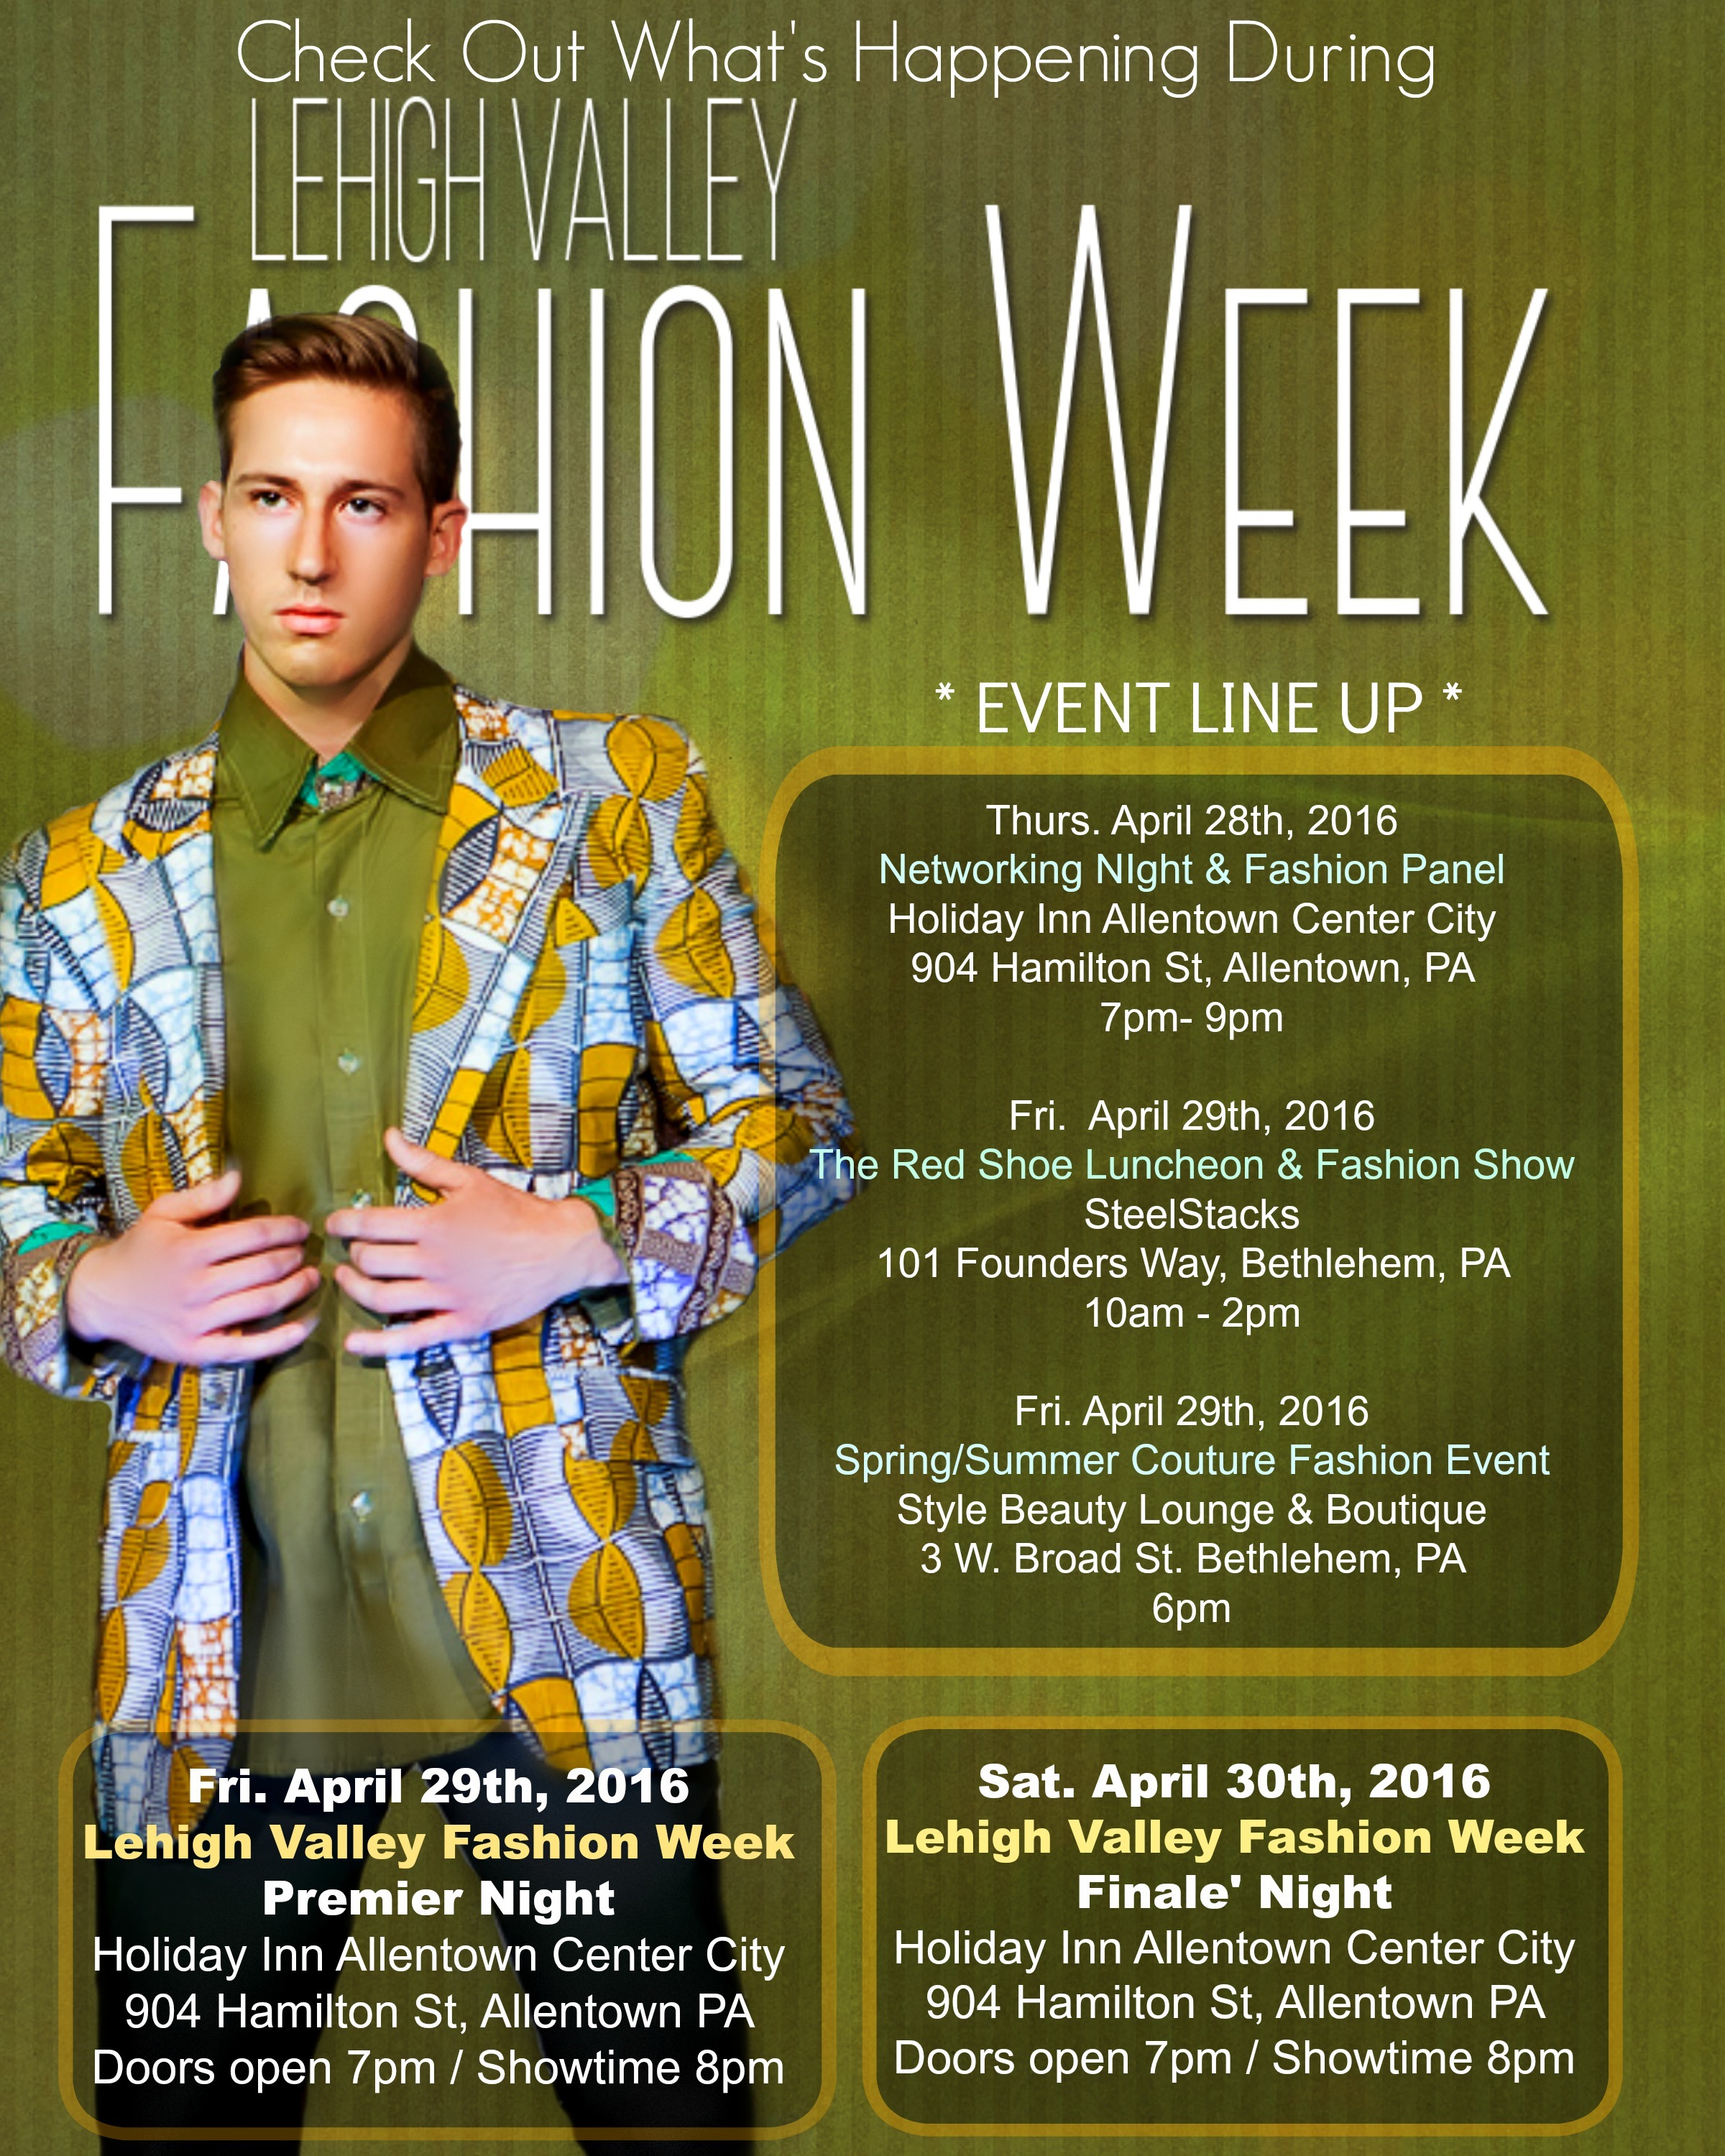 Lehigh Valley Fashion Week Season 2 Starts Thursday - Lehigh Happening